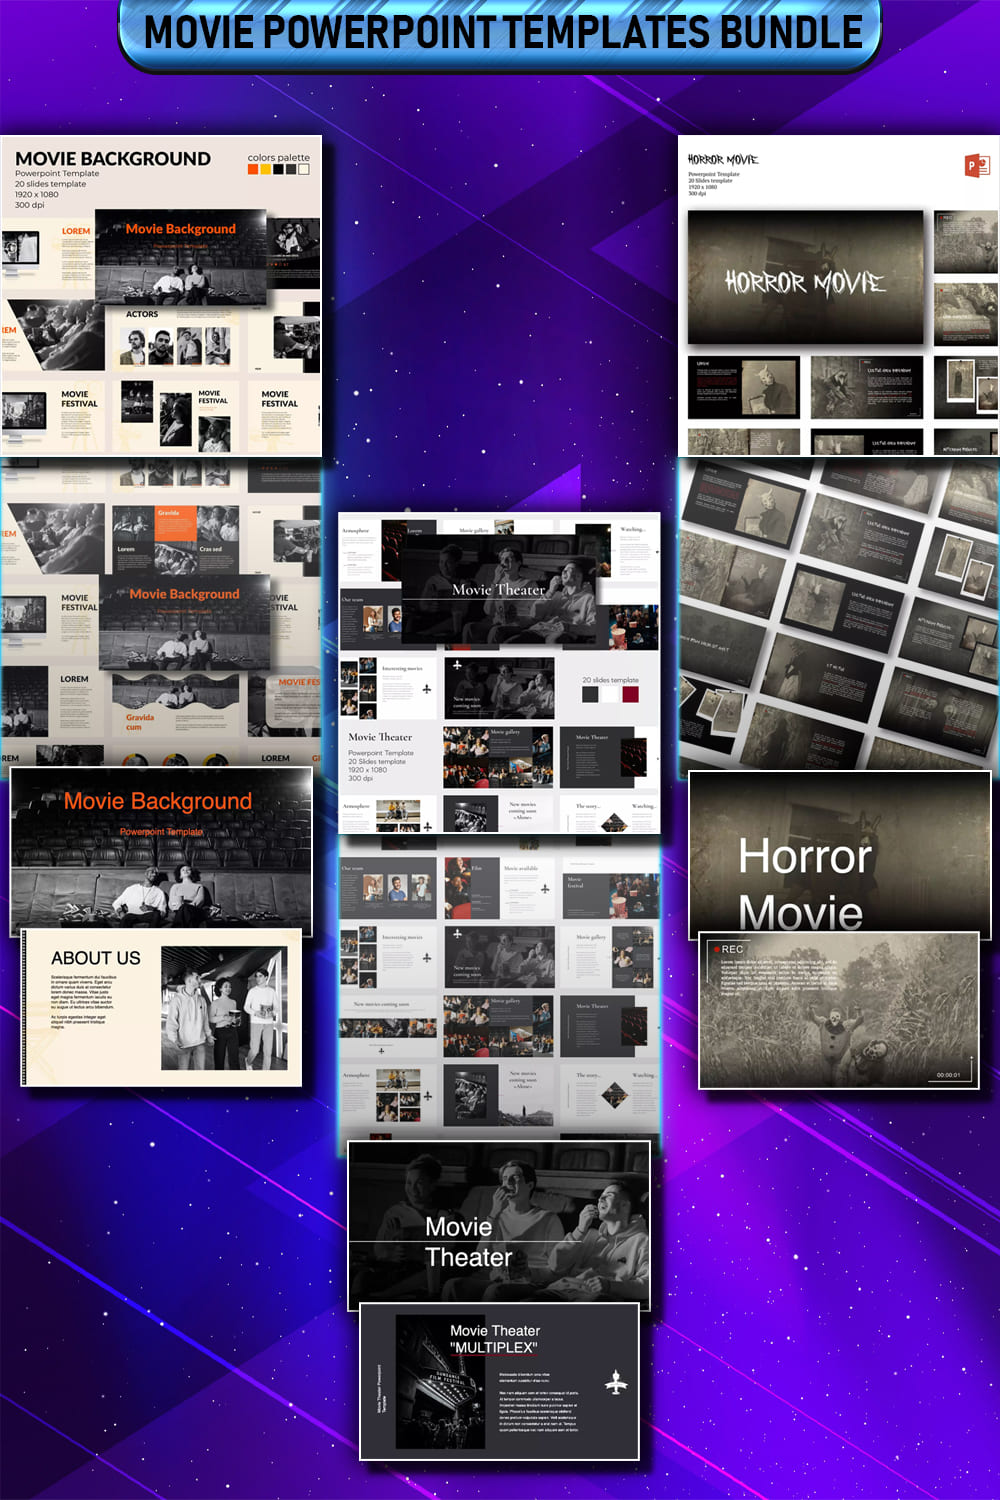 Movie Powerpoint Templates Bundle Pinterest image.